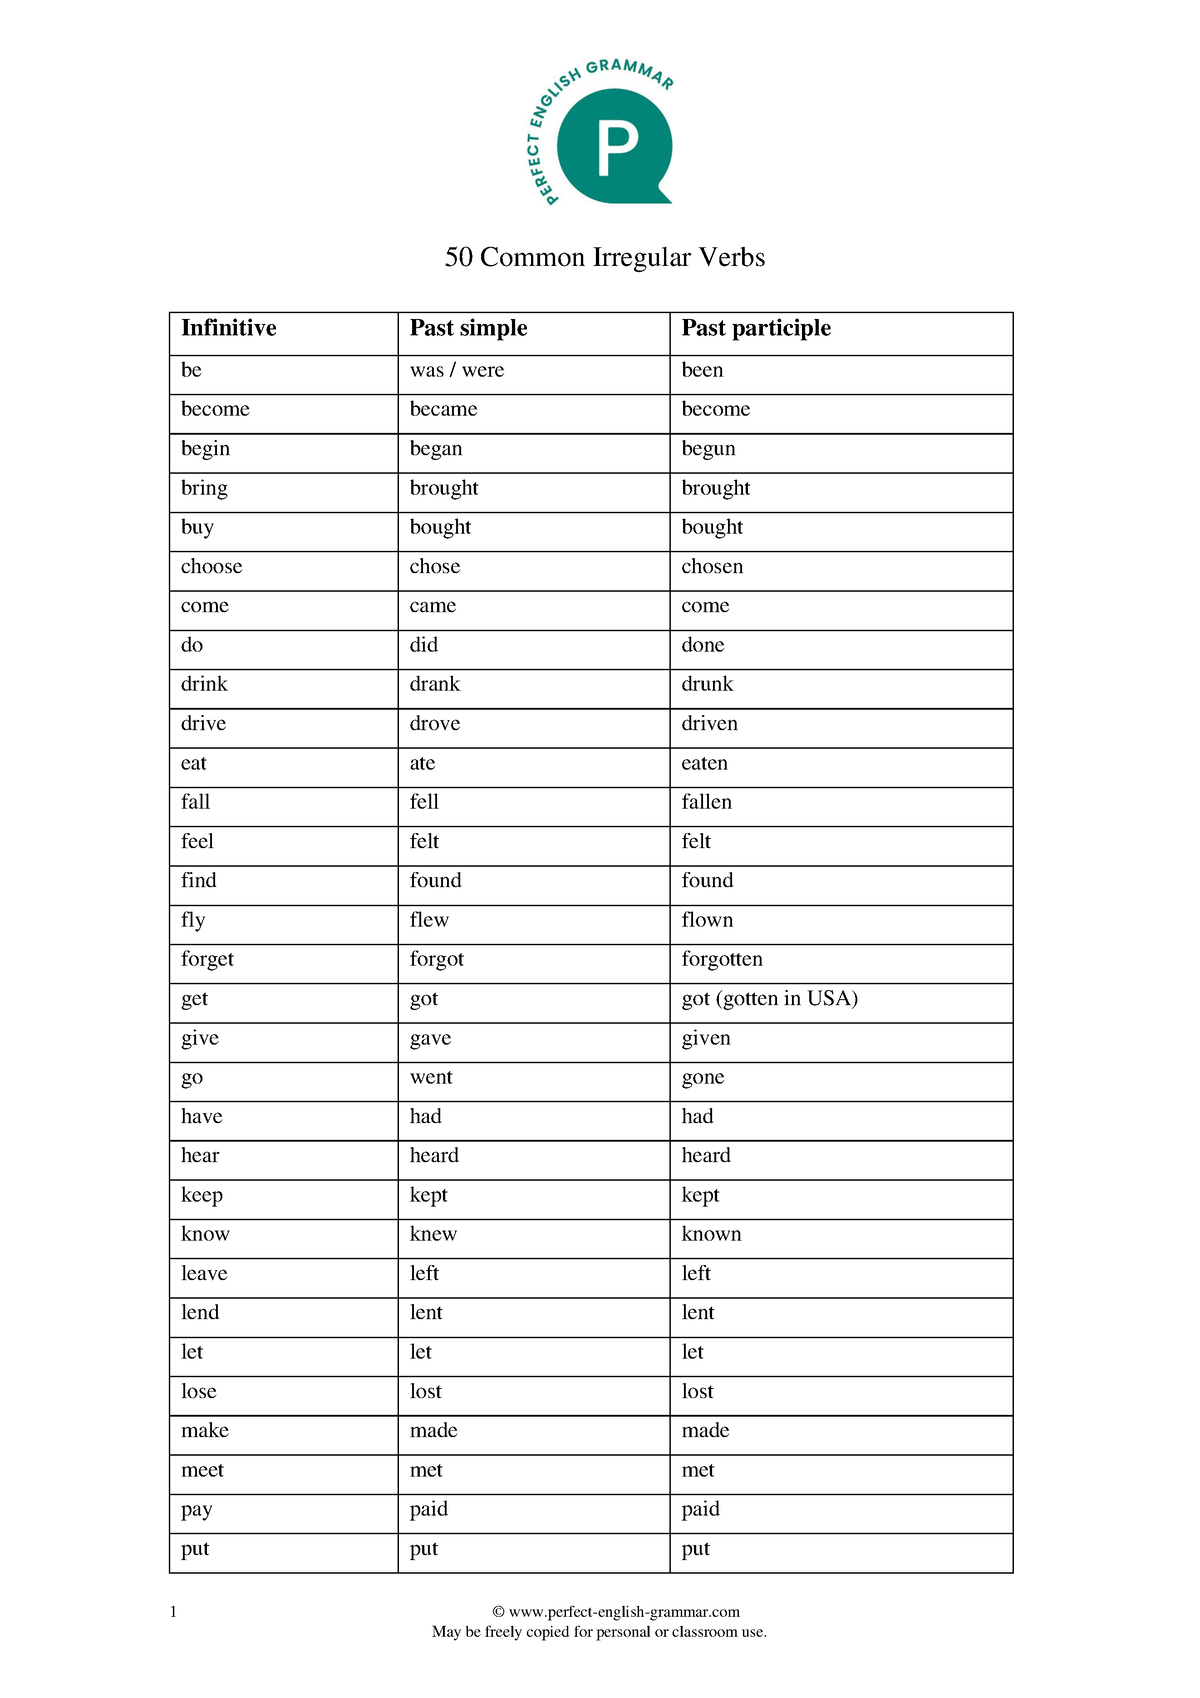 50-common-irregular-verbs-list-1-perfect-english-grammar-may-be